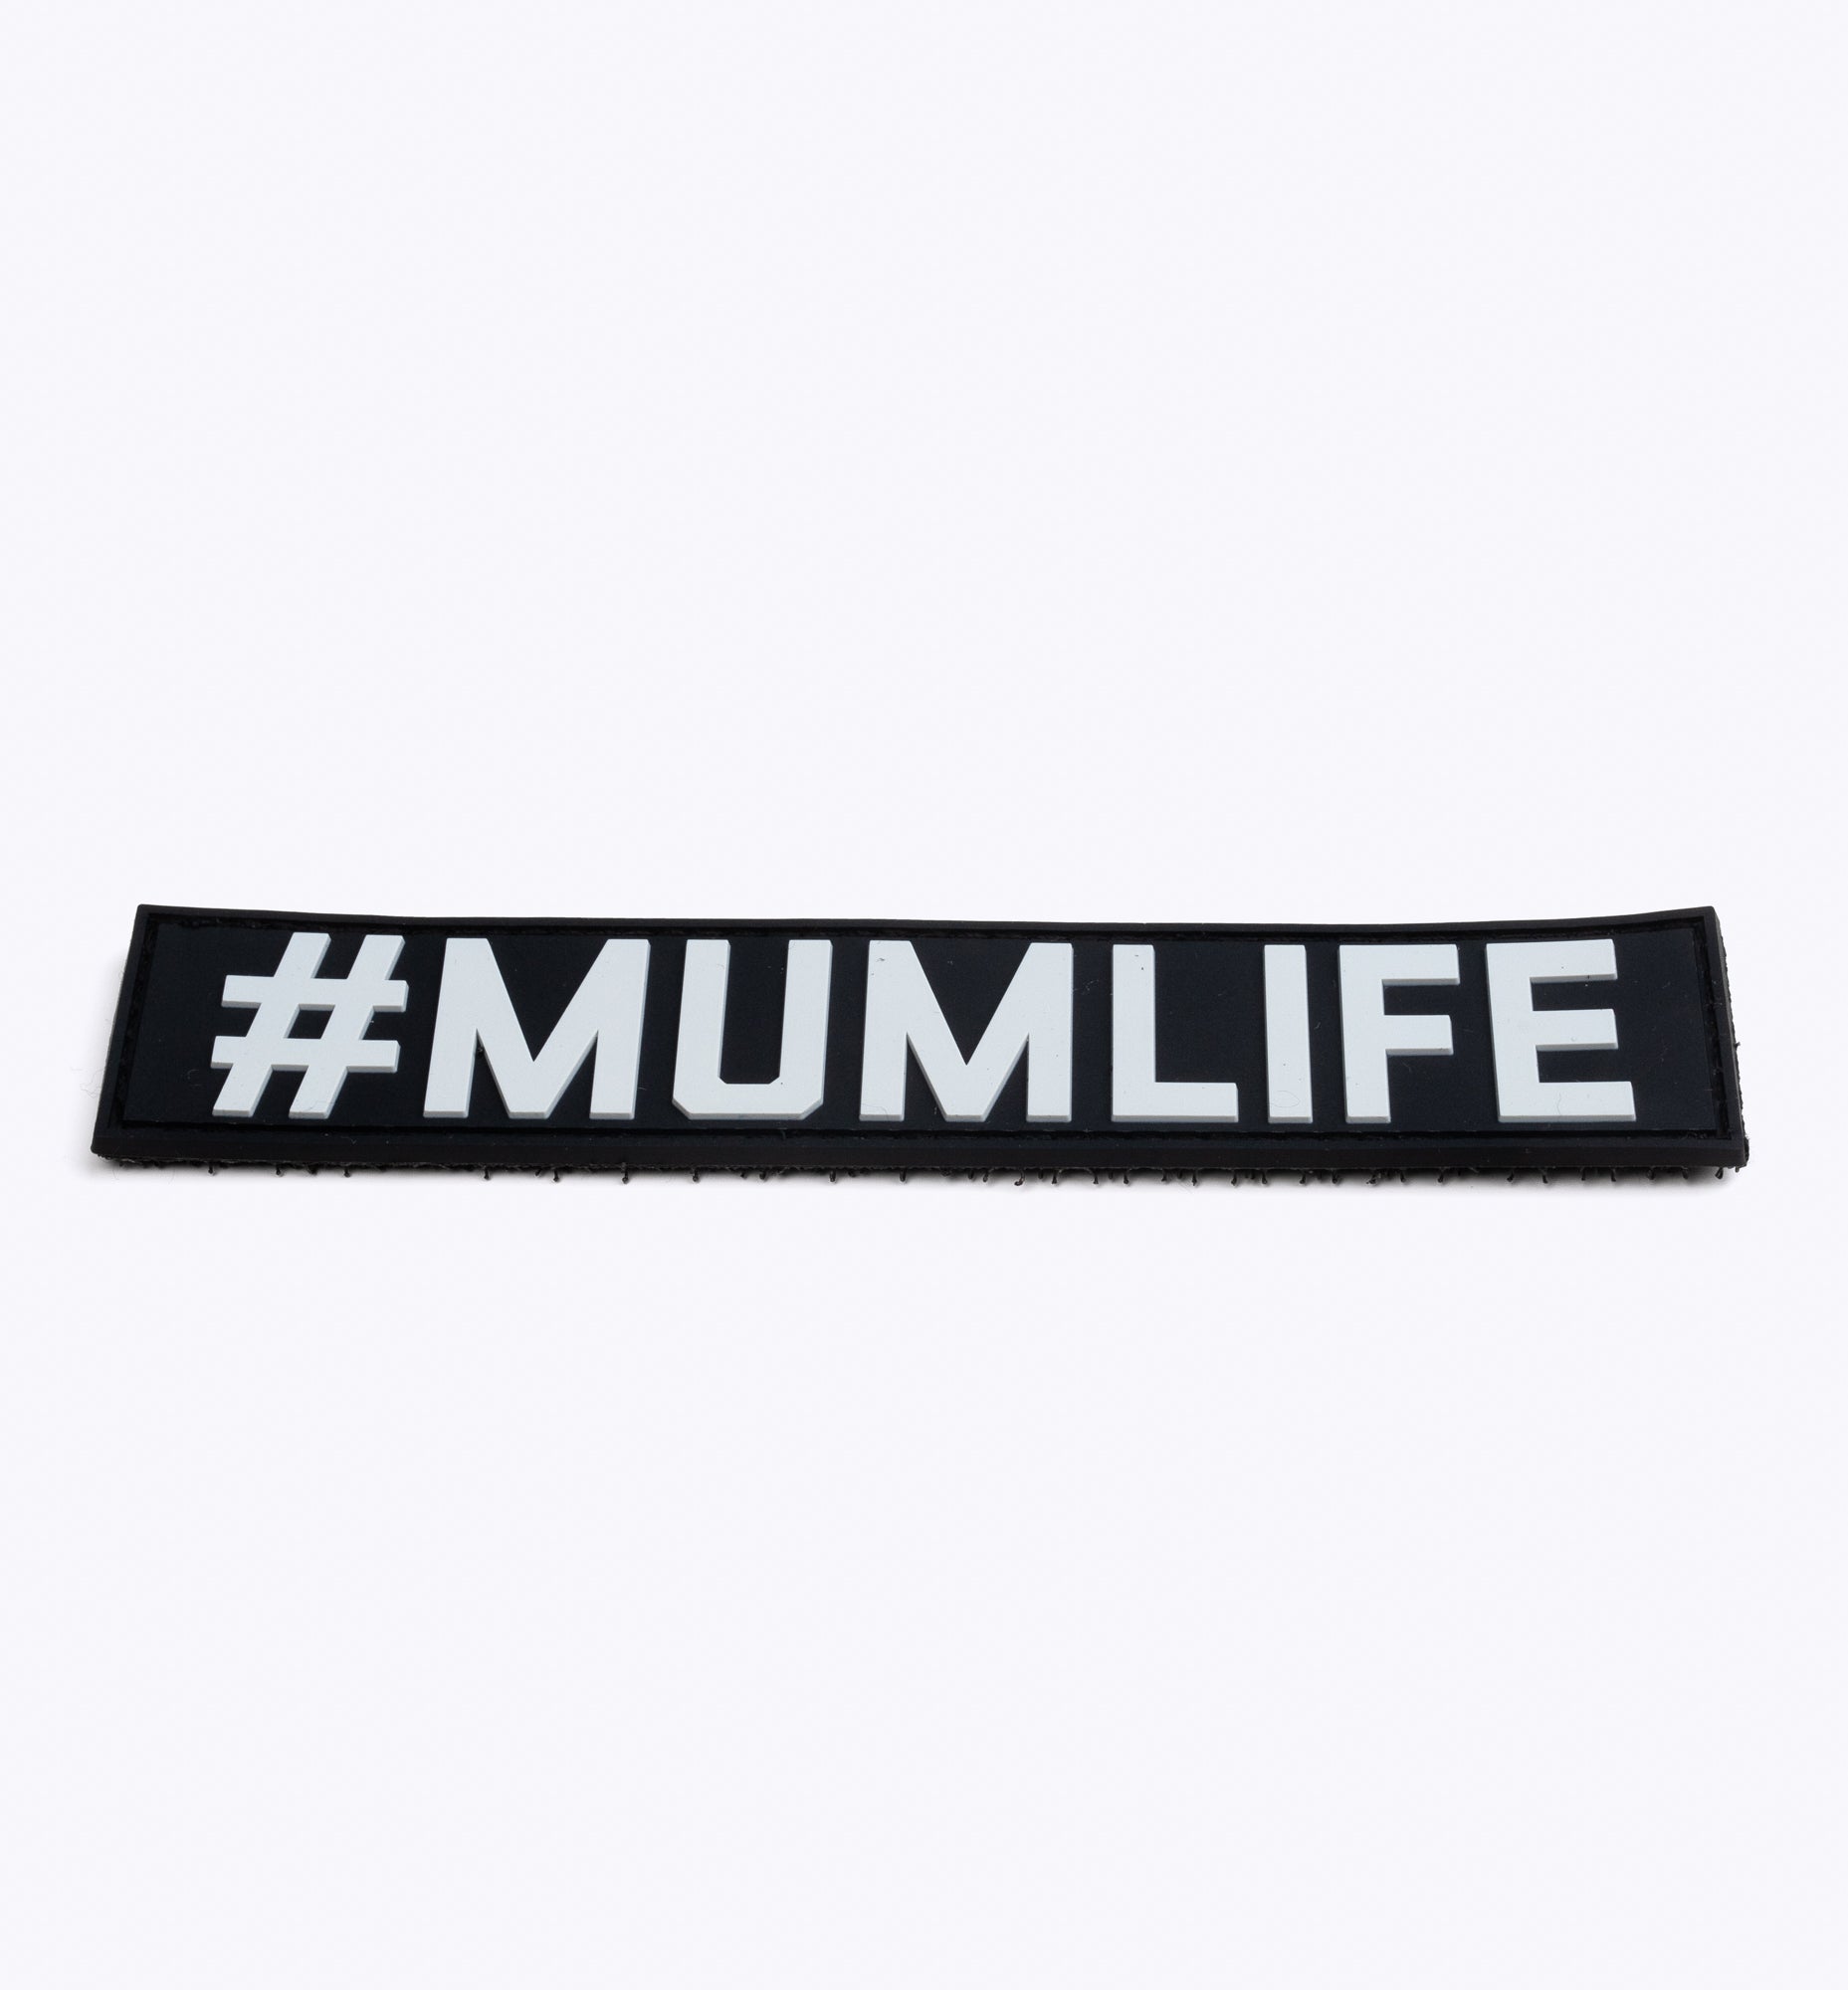 '#MUMLIFE' PVC Patch